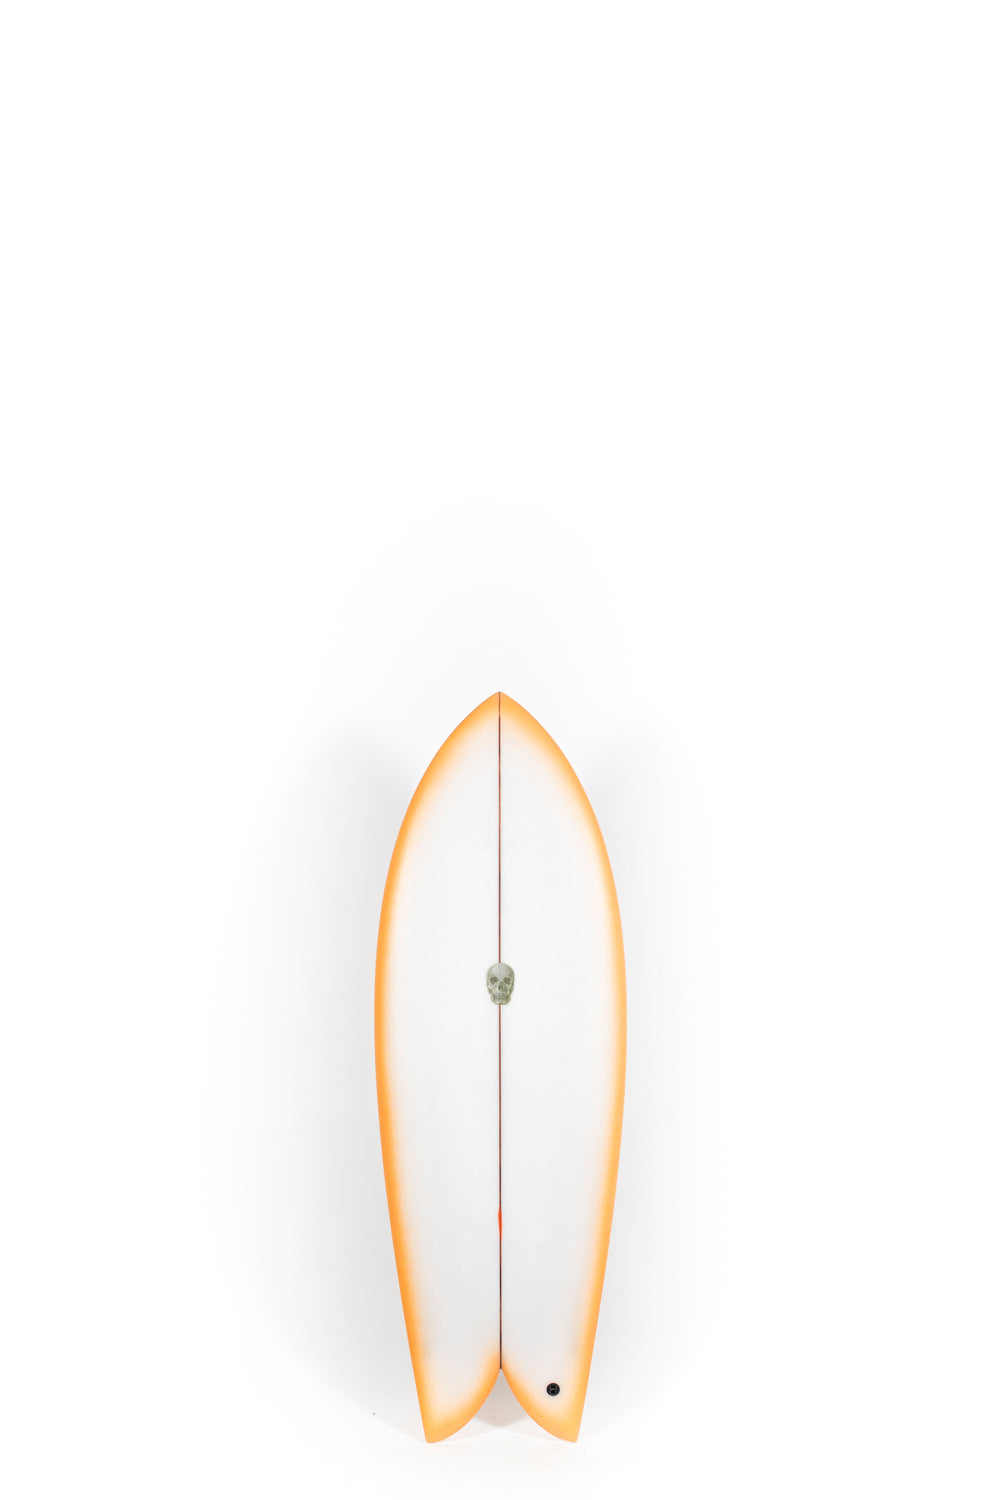 Pukas Surf shop - Christenson Surfboards - CHRIS FISH - 5'0